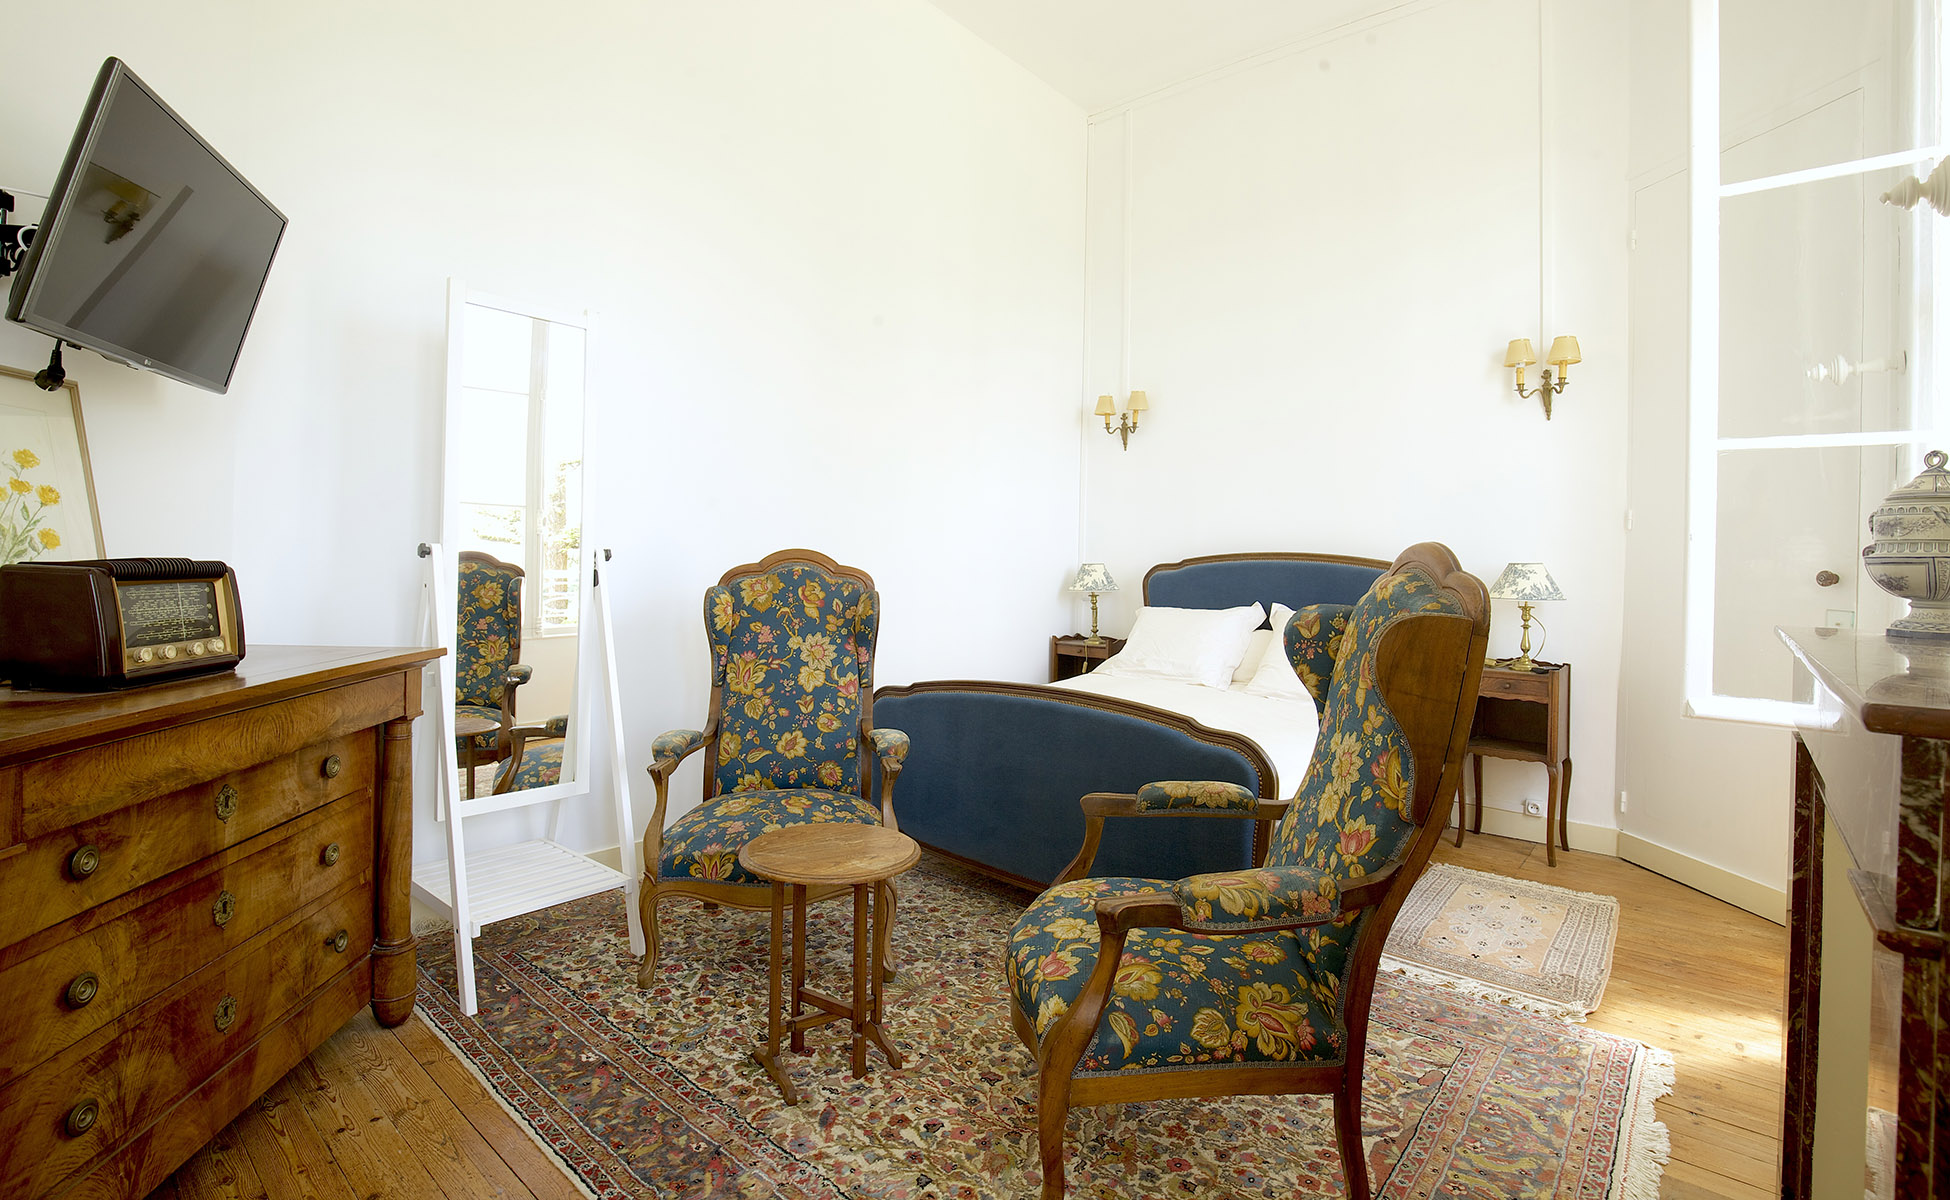 Lovelydays luxury service apartment rental - Libourne - Chateau de JUNAYME - Lovelysuite - 7 bedrooms - 6 bathrooms - King bed - 85bea5513f07 - Lovelydays